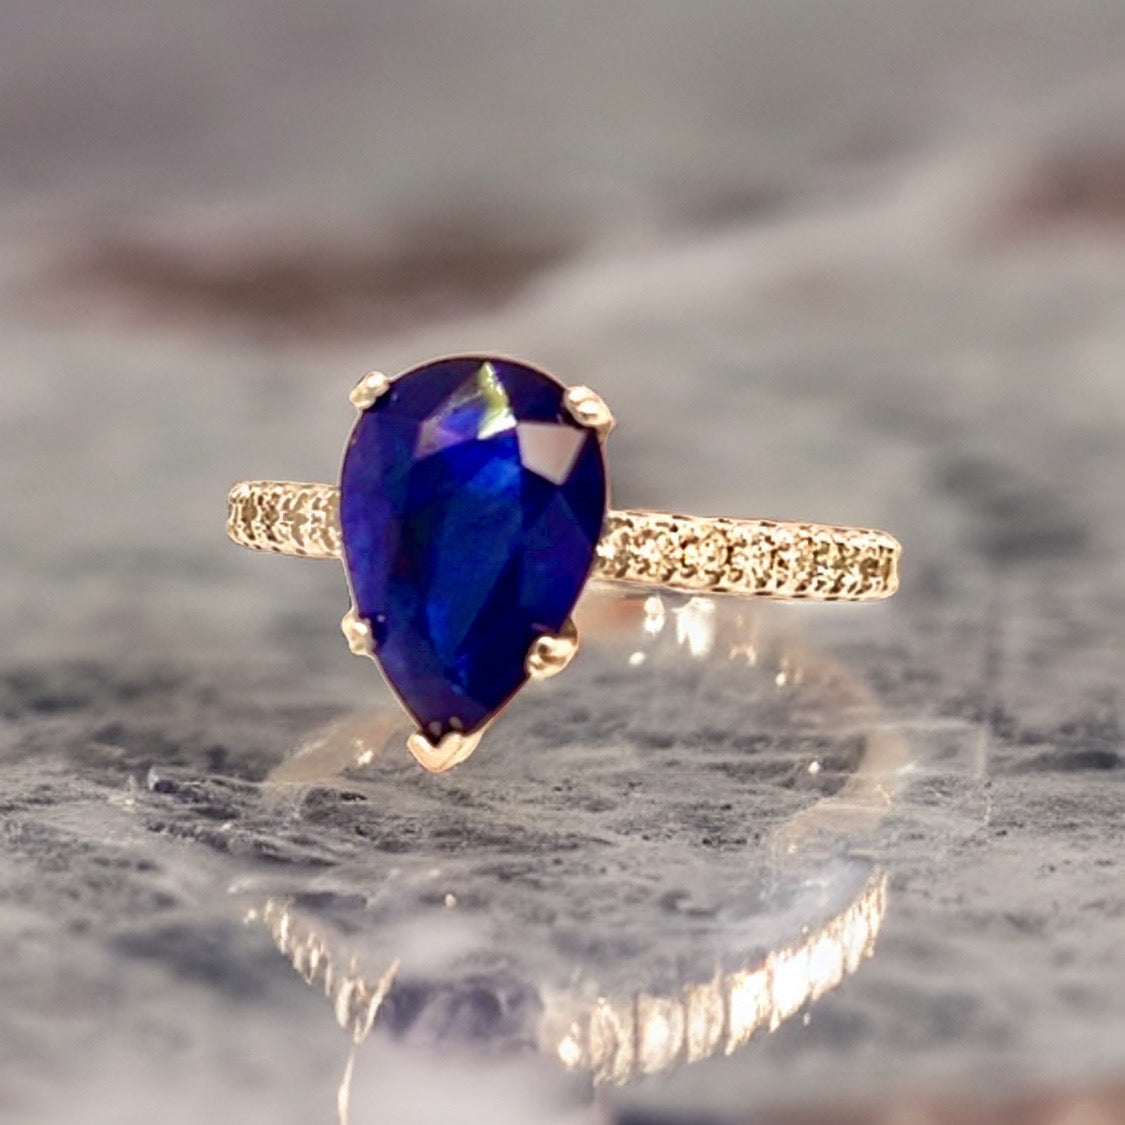 Sapphire Diamond Ring Size 6.5 14k Gold 2.77 TCW Certified $2,675 215415